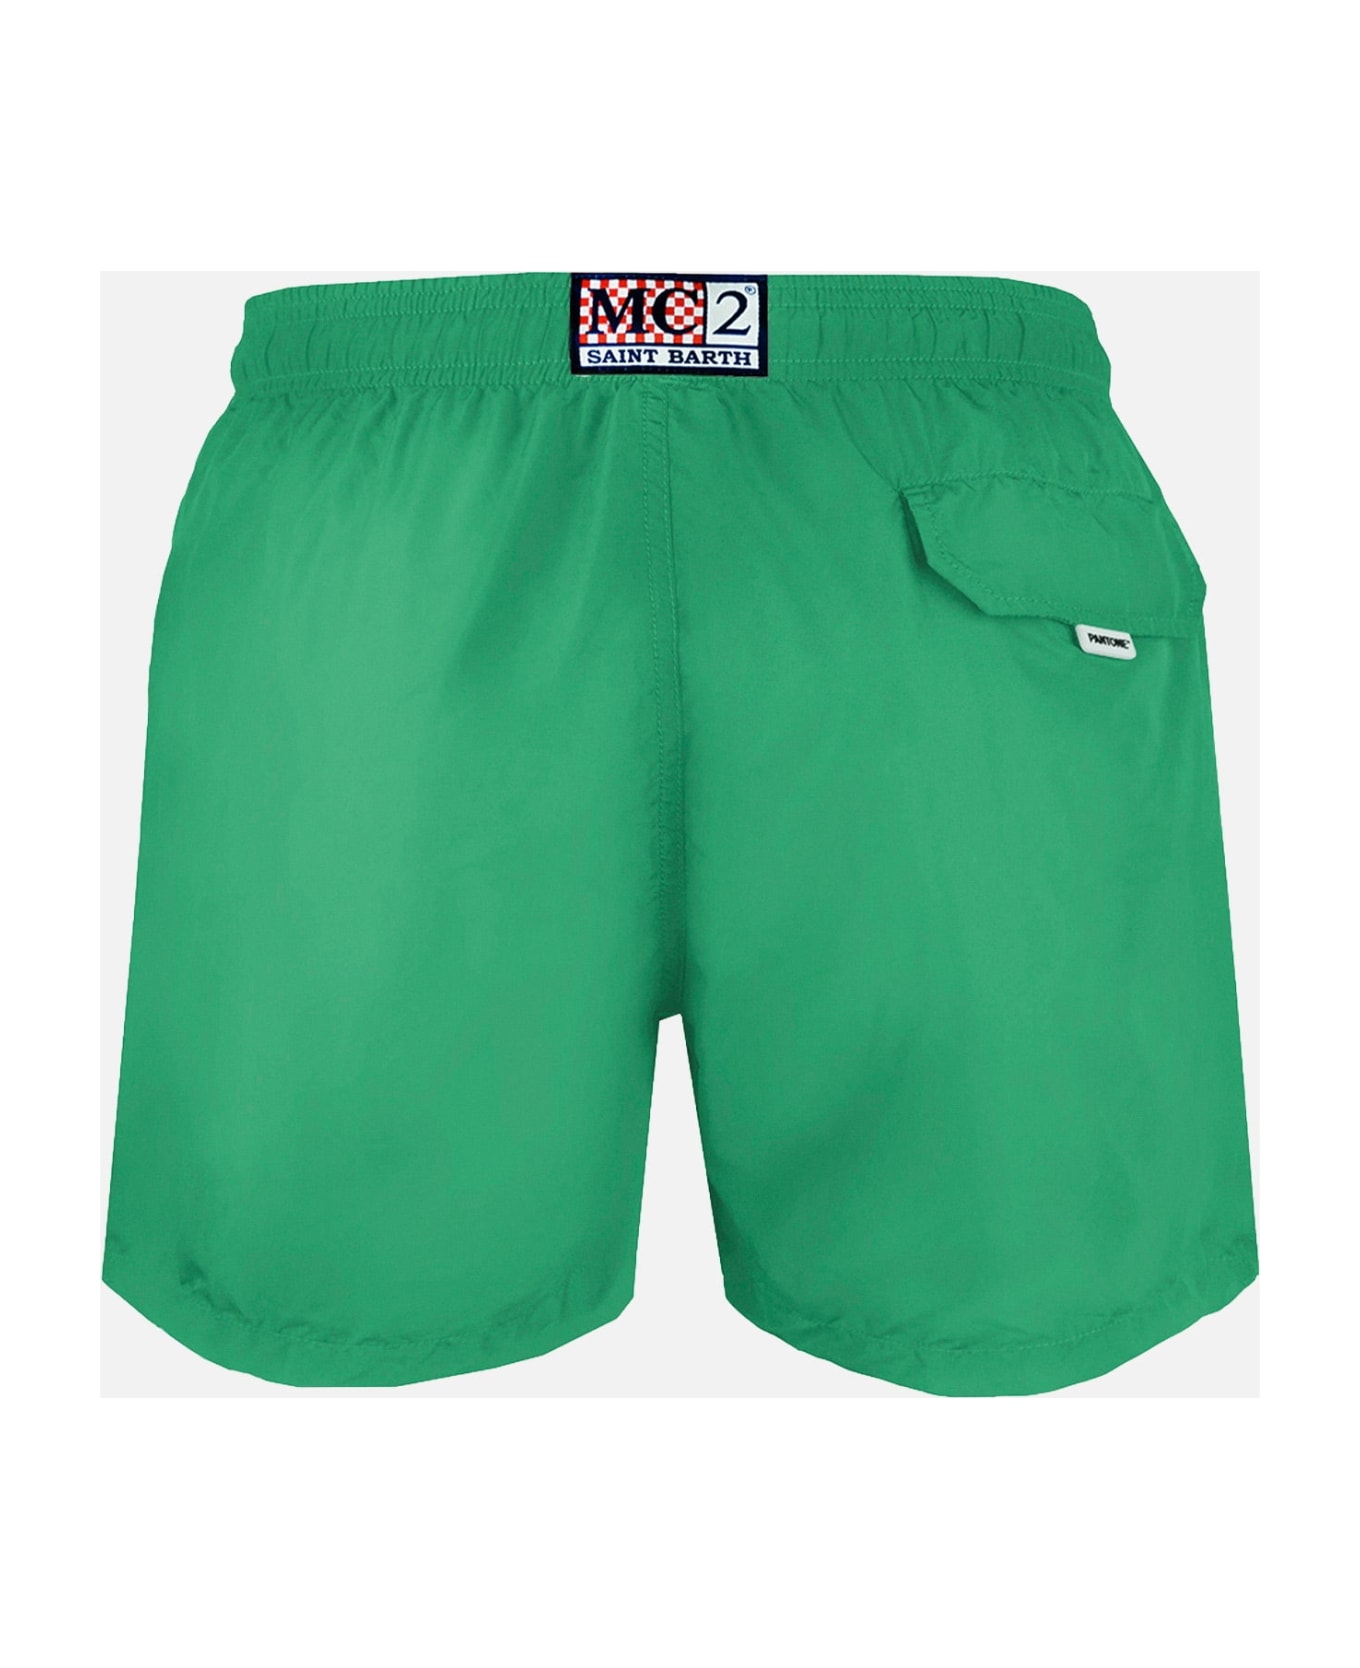 MC2 Saint Barth Man Green Swim Shorts | Pantone Special Edition - GREEN